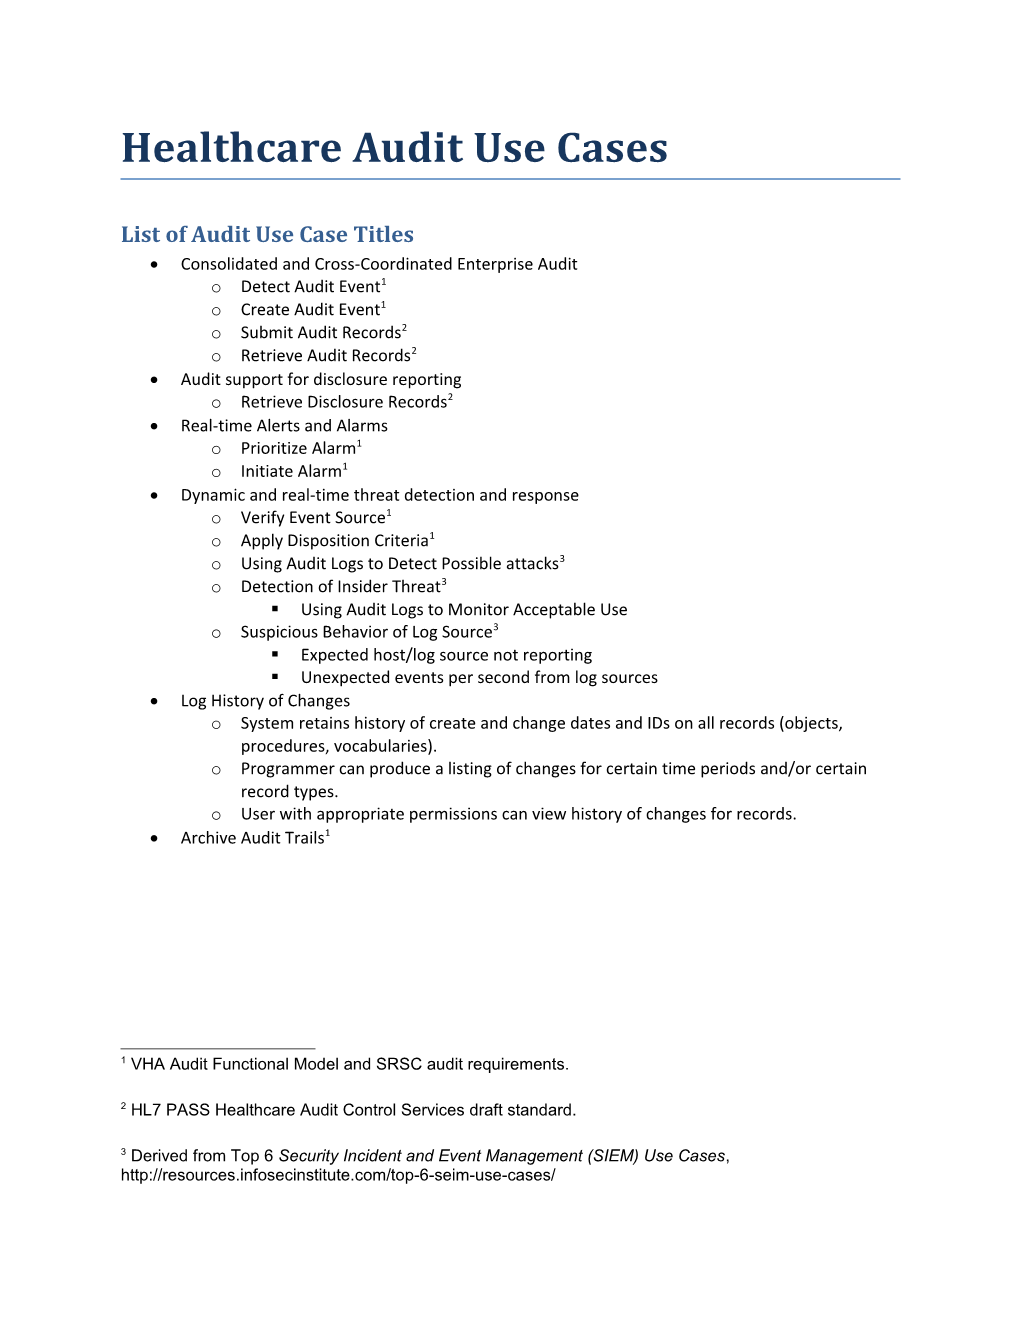 List of Audit Use Case Titles